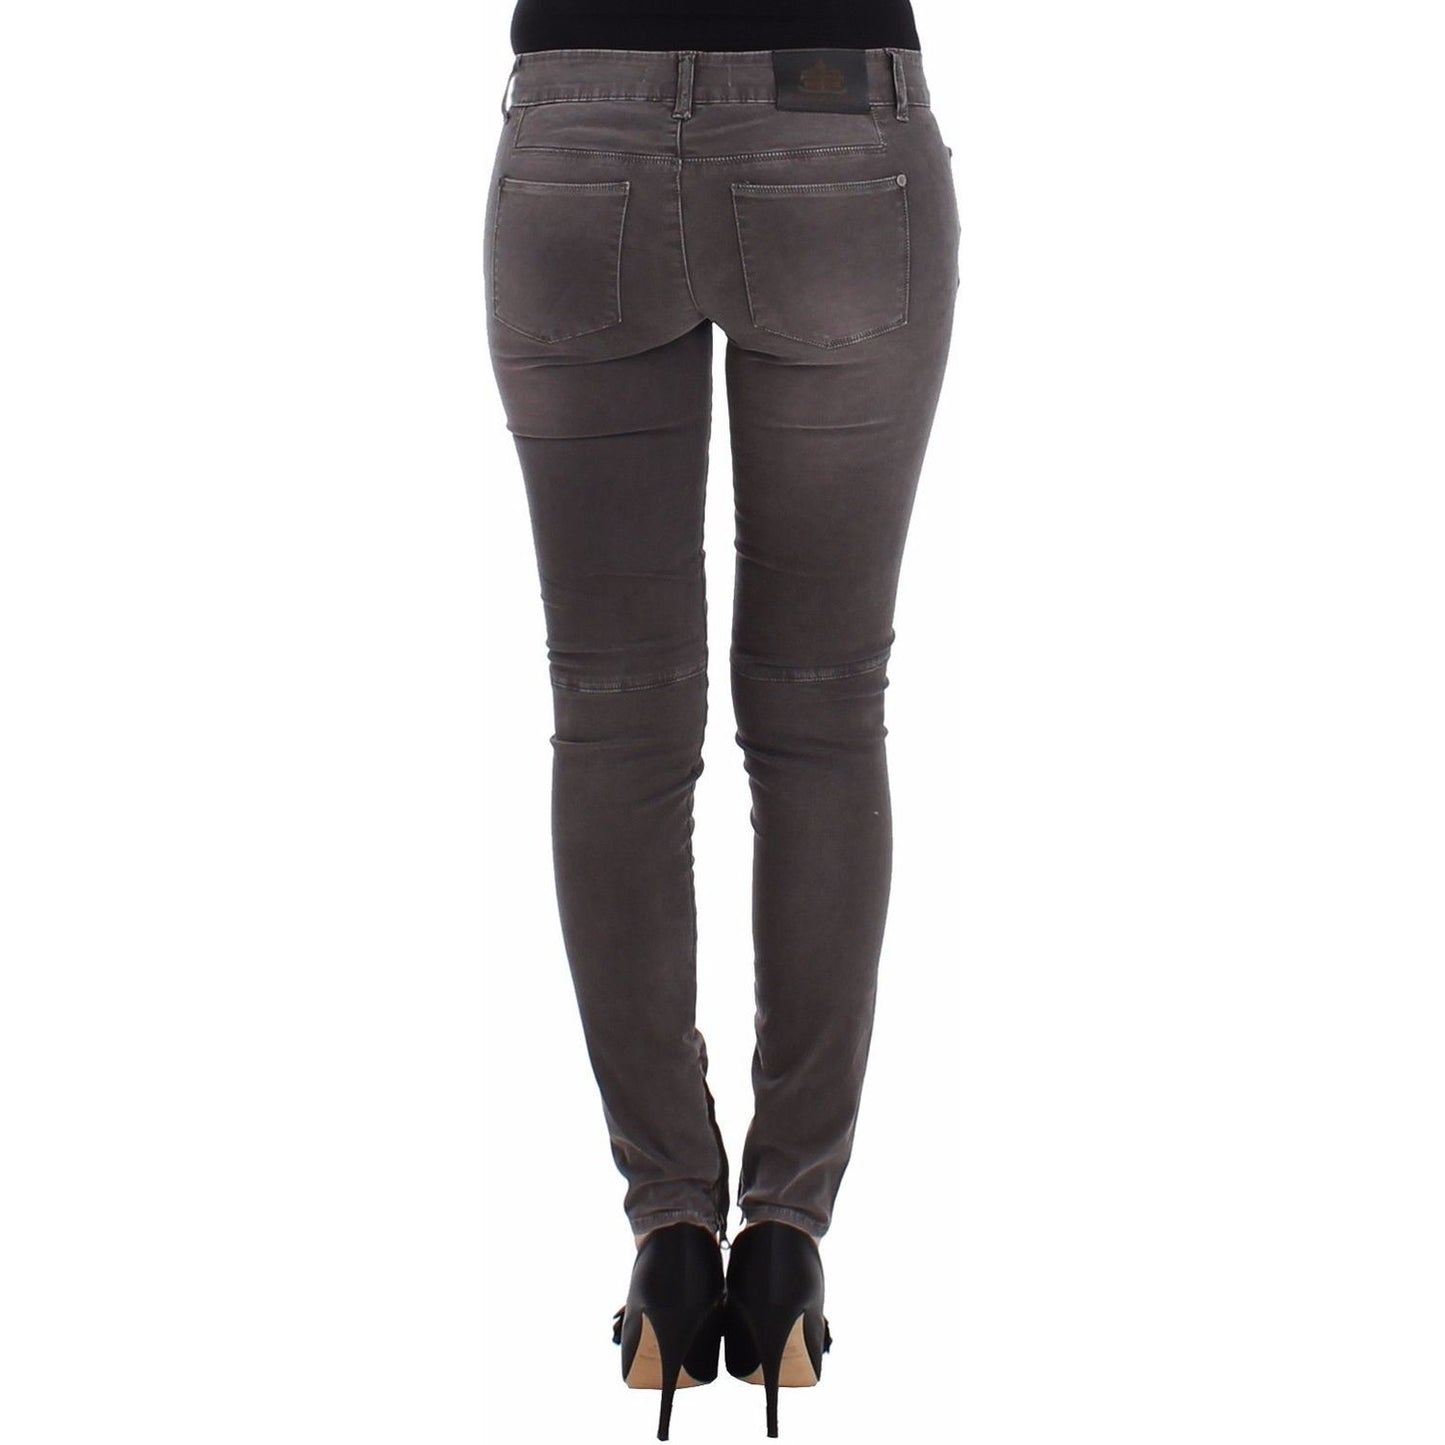 Ermanno Scervino Chic Gray Slim Leg Jeans - Elegance Meets Comfort gray-slim-jeans-denim-pants-skinny-leg-stretch-1 37416-gray-slim-jeans-denim-pants-skinny-leg-stretch-2-2.jpg